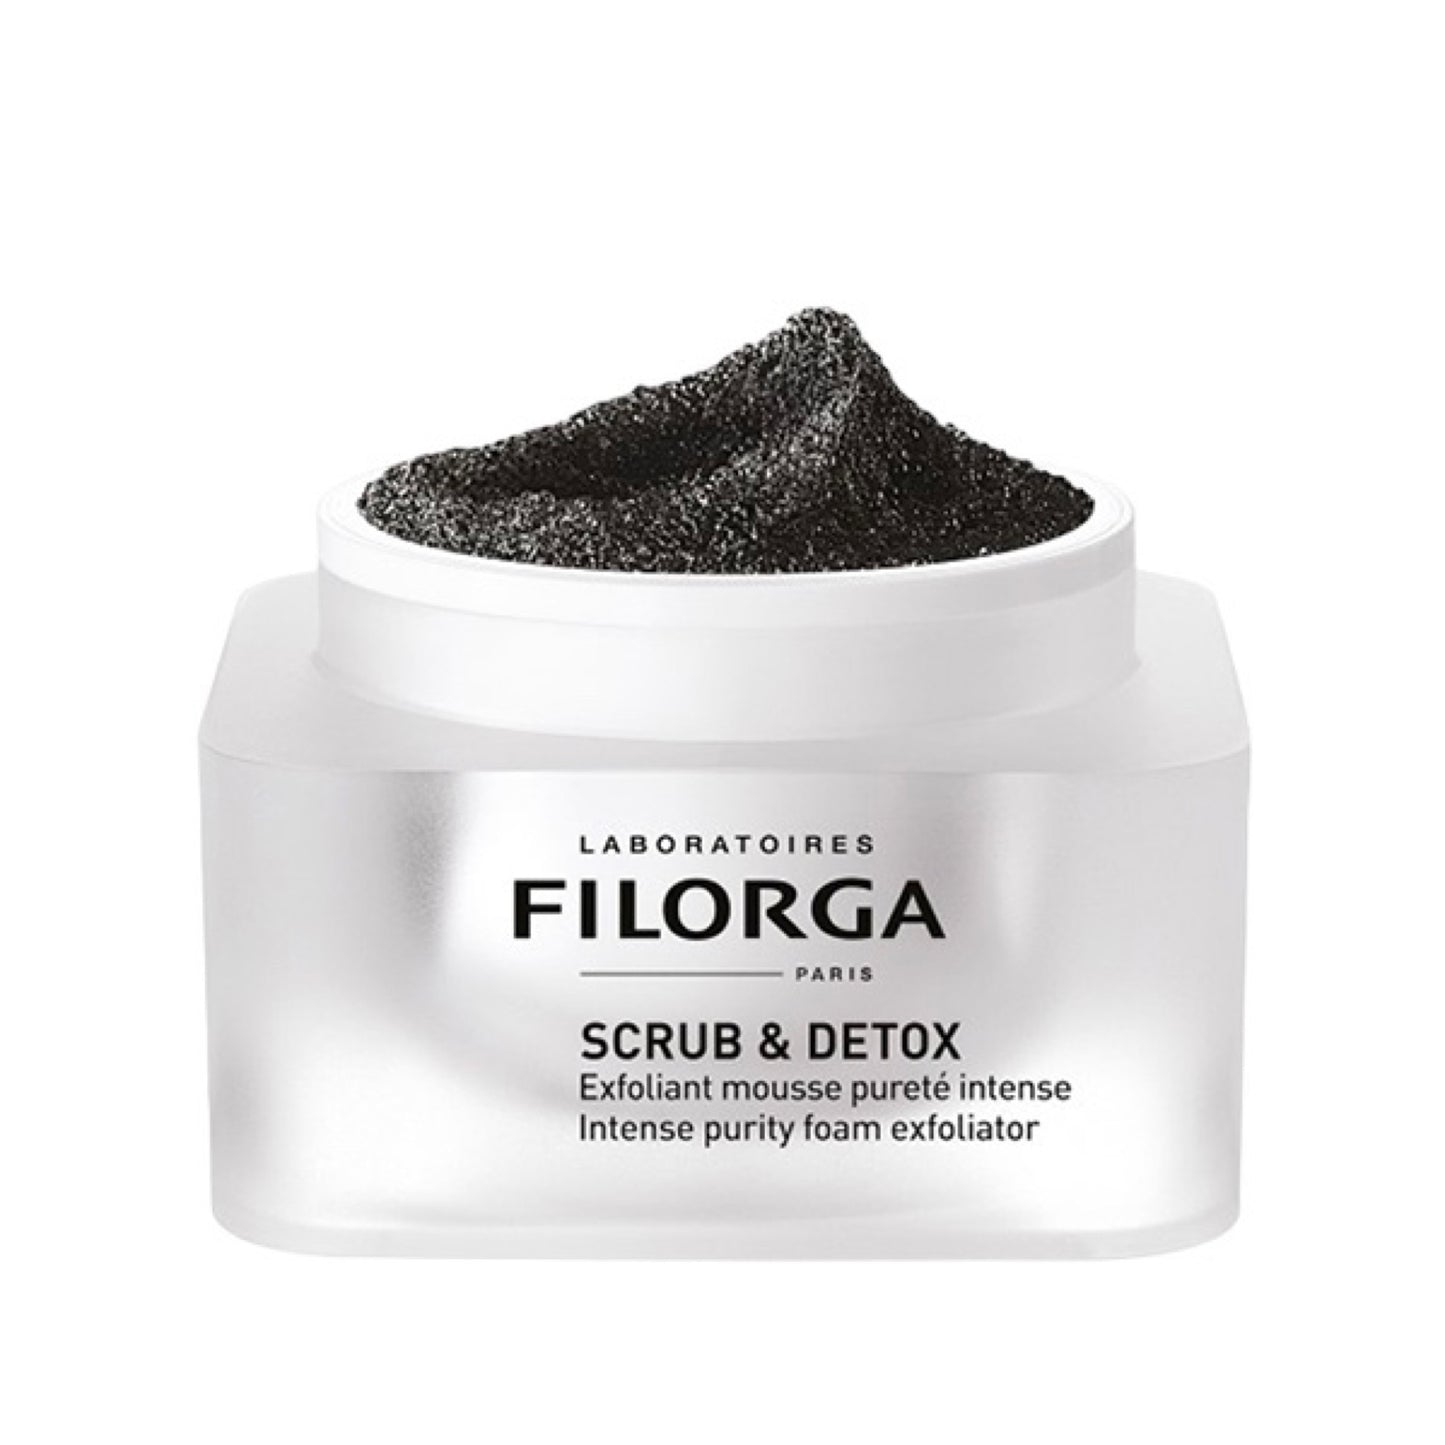 Filorga Scrub And Detox Intense Purity Foam Exfoliator 50Ml